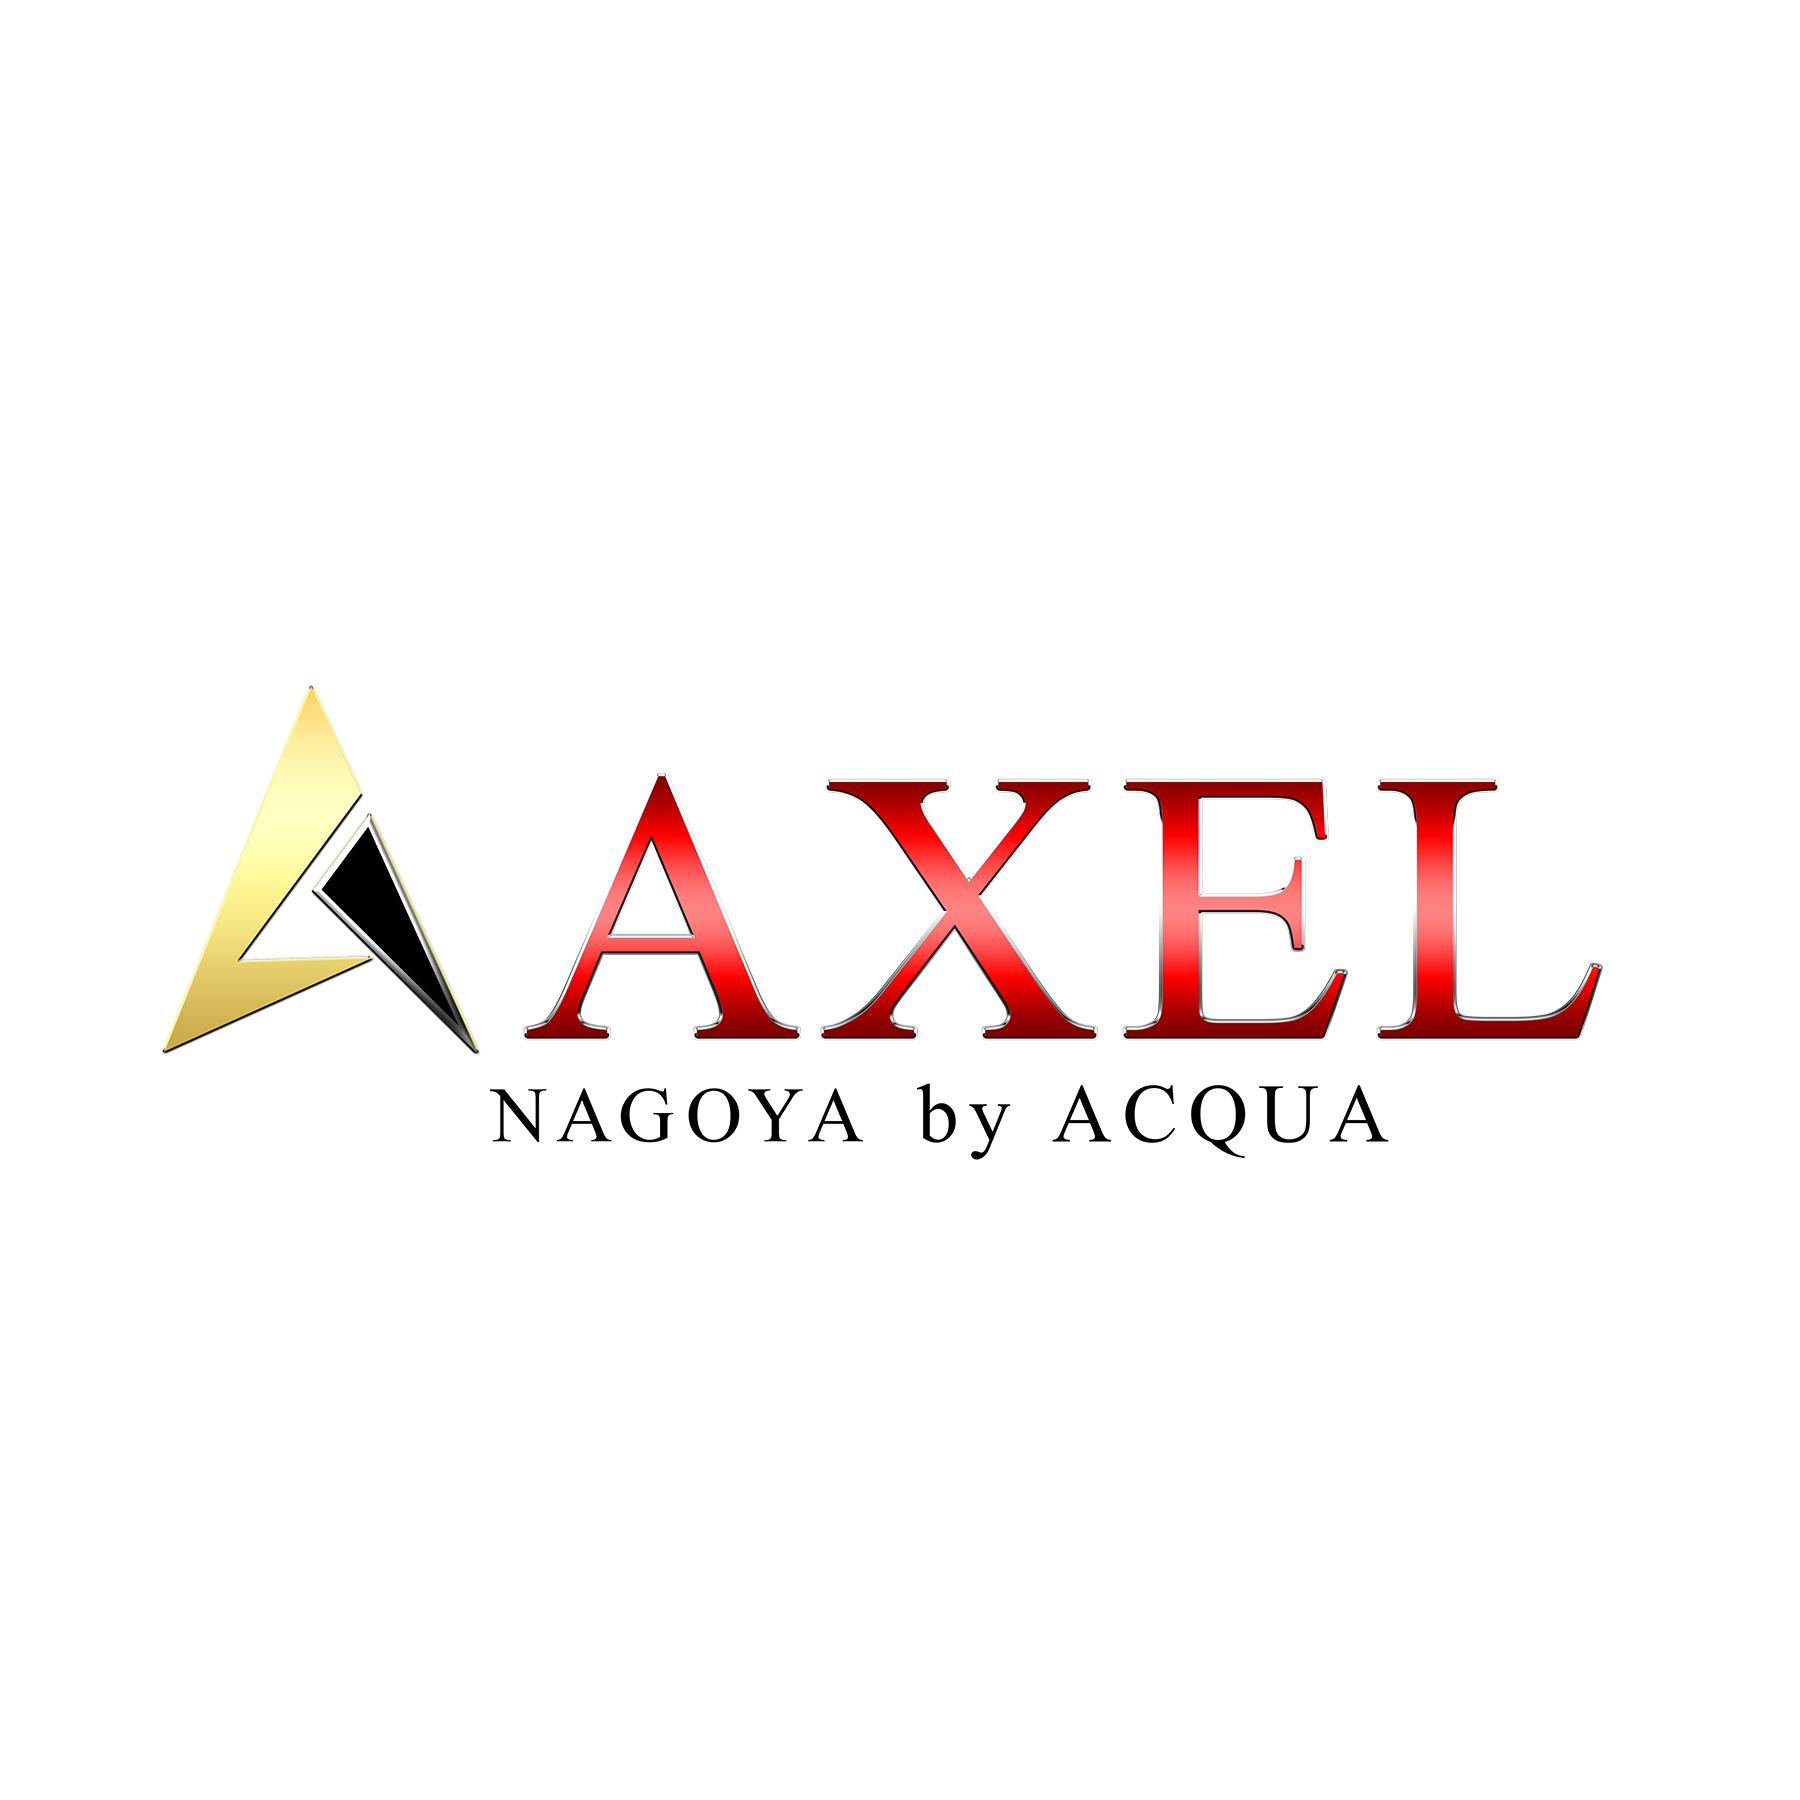 AXEL NAGOYA by ACQUA